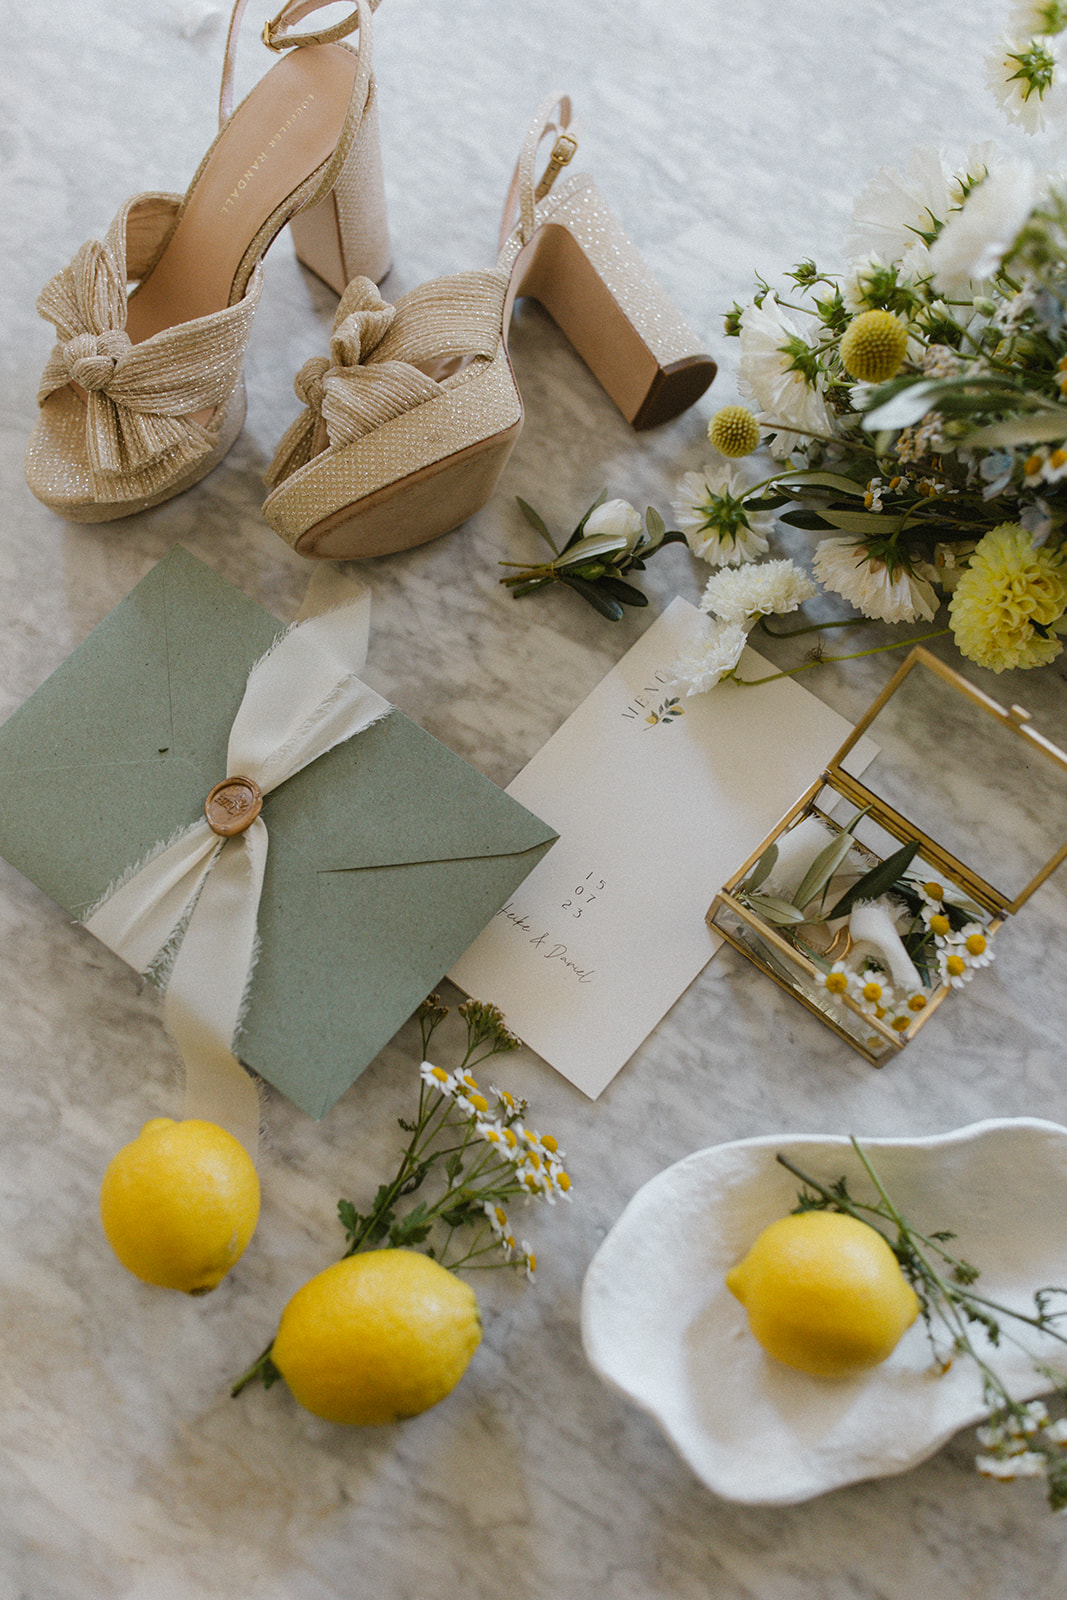 Wedding-Stationery-on-Marble-Citrus-Olive-Loeffler-Randall-Wedding-Shoes